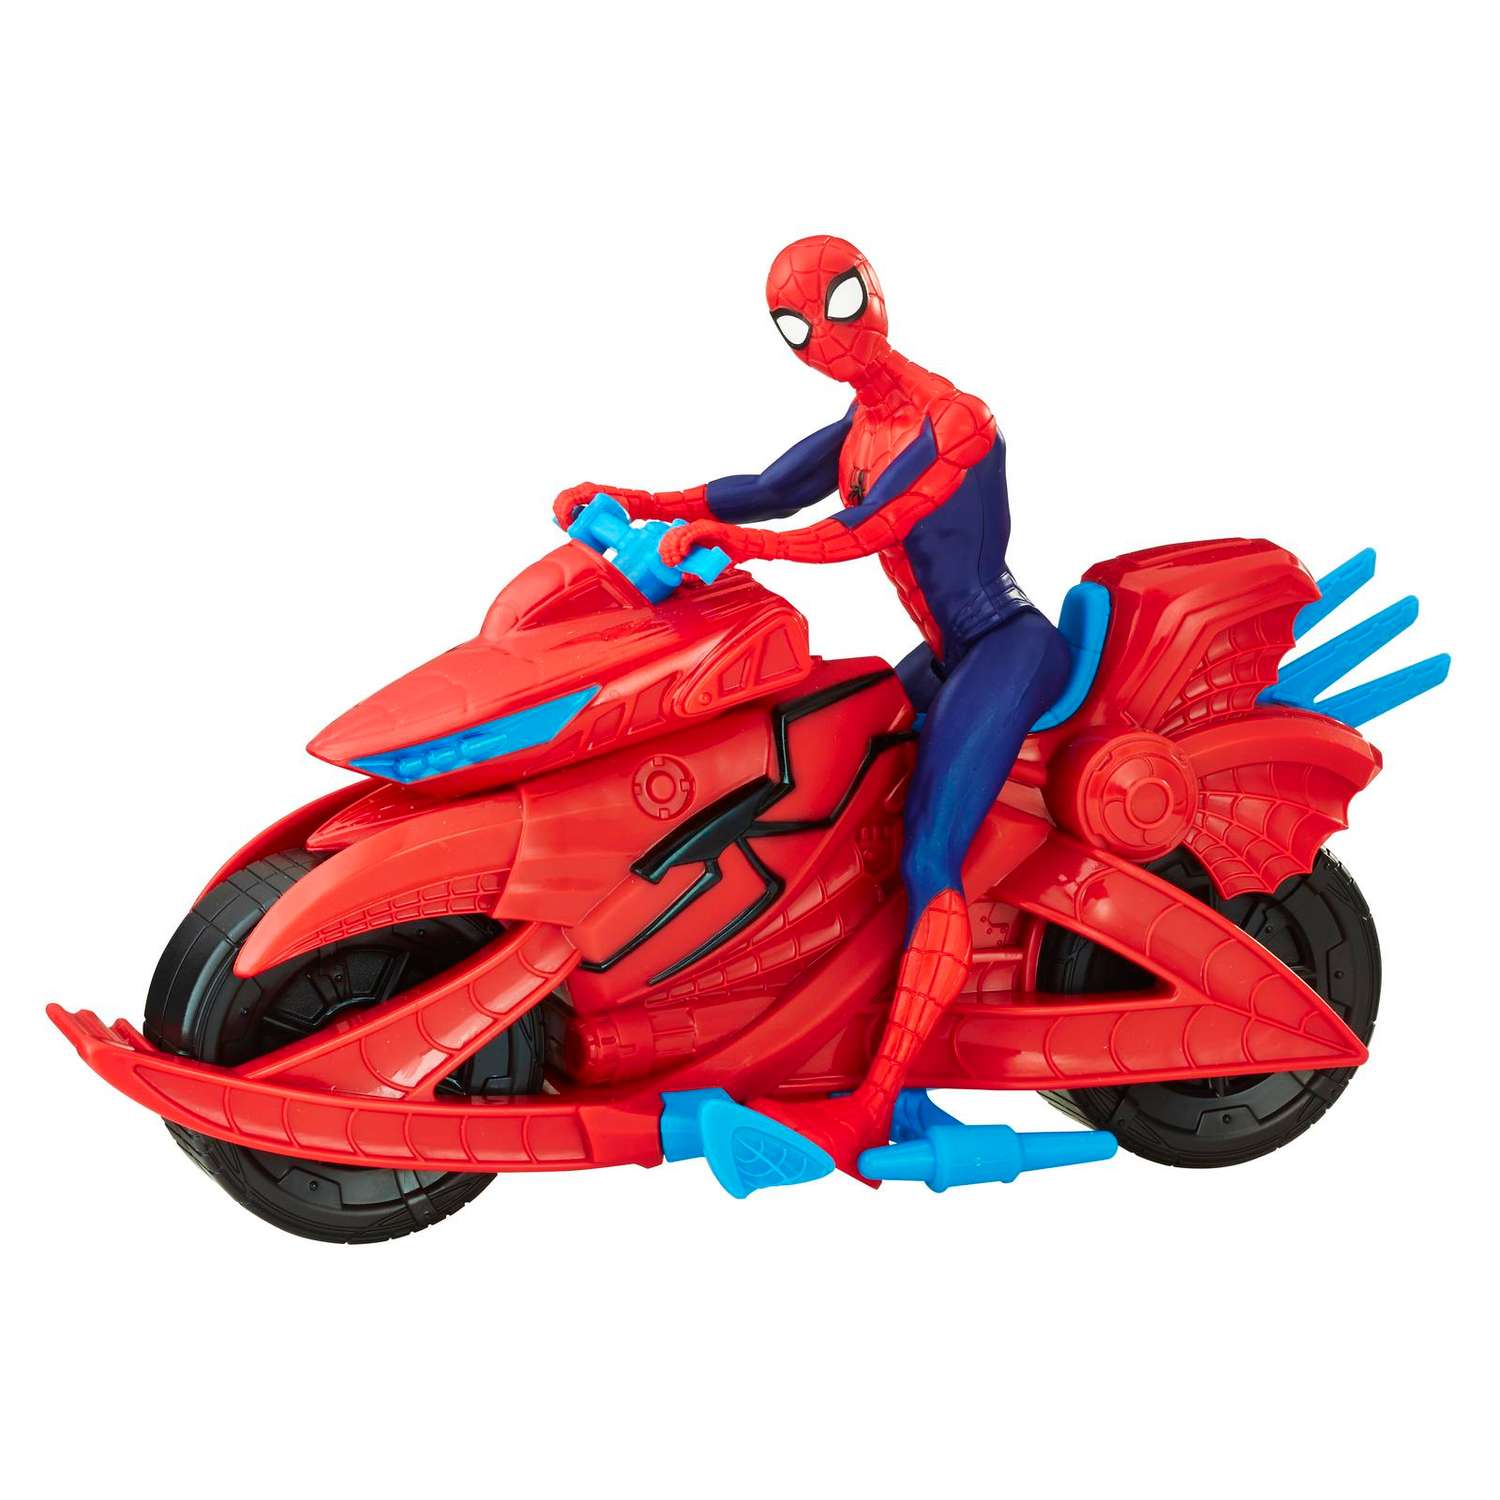 Фигурка Человек-Паук (Spider-man) Человек-паук с транспортом E3368EU4 - фото 4